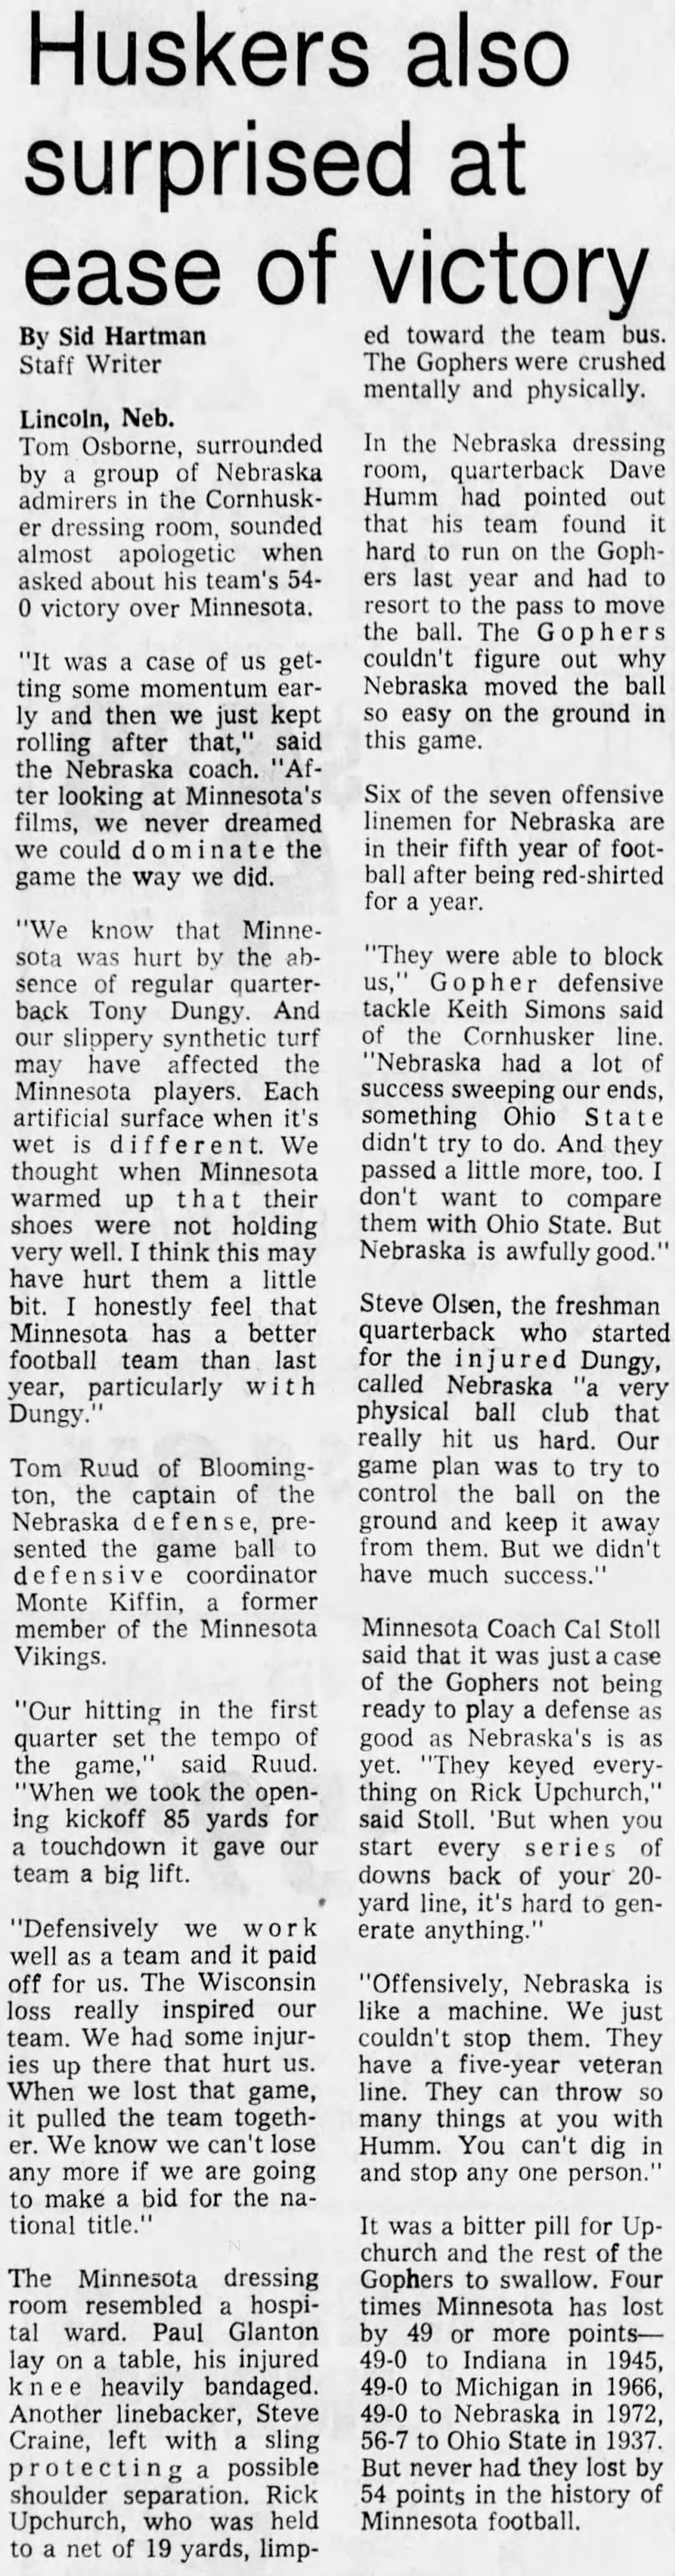 1974 Nebraska-Minnesota football postgame